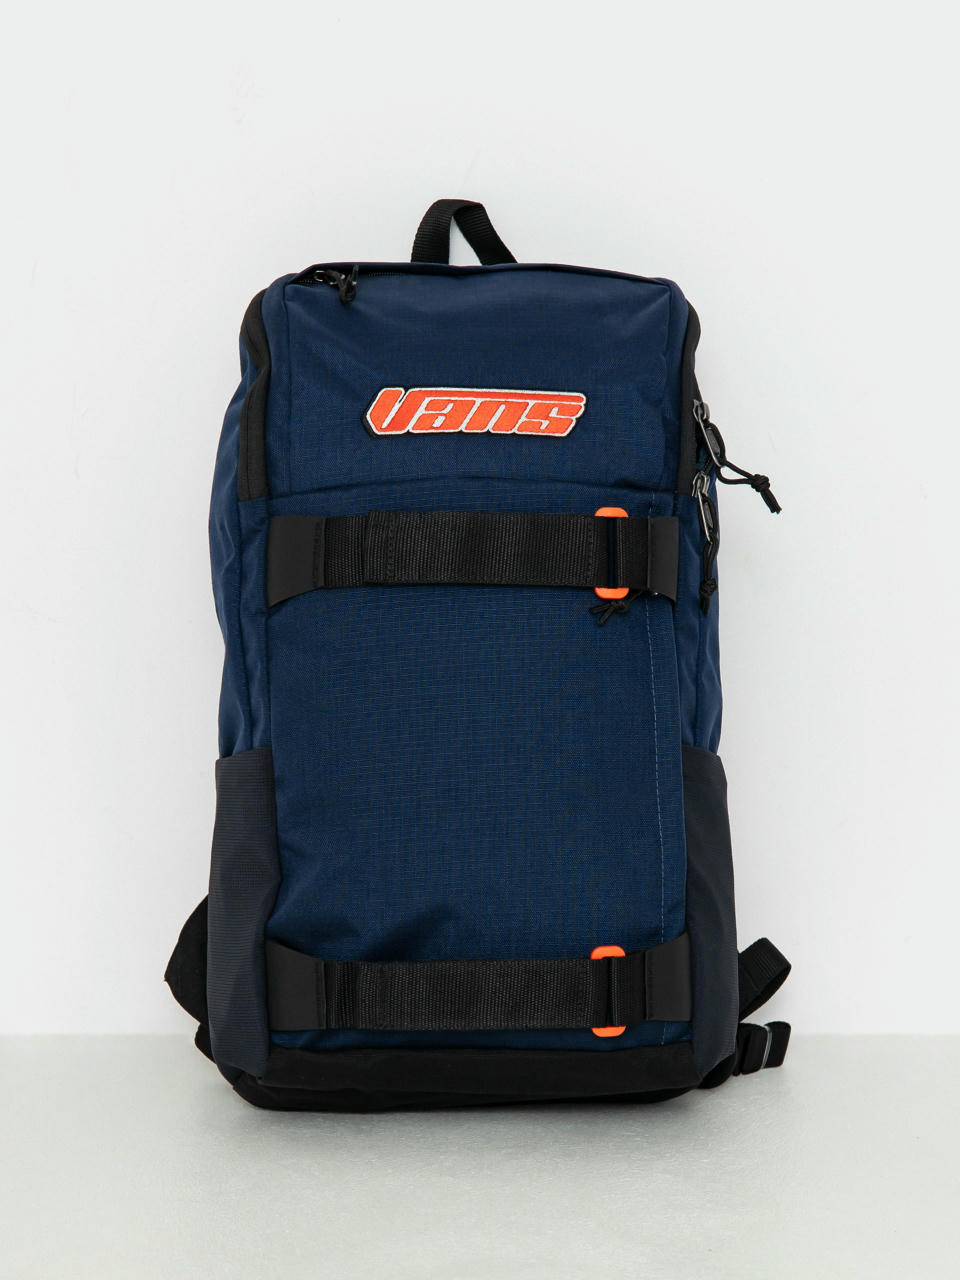 Vans Obstacle Backpack (dress blues/white)